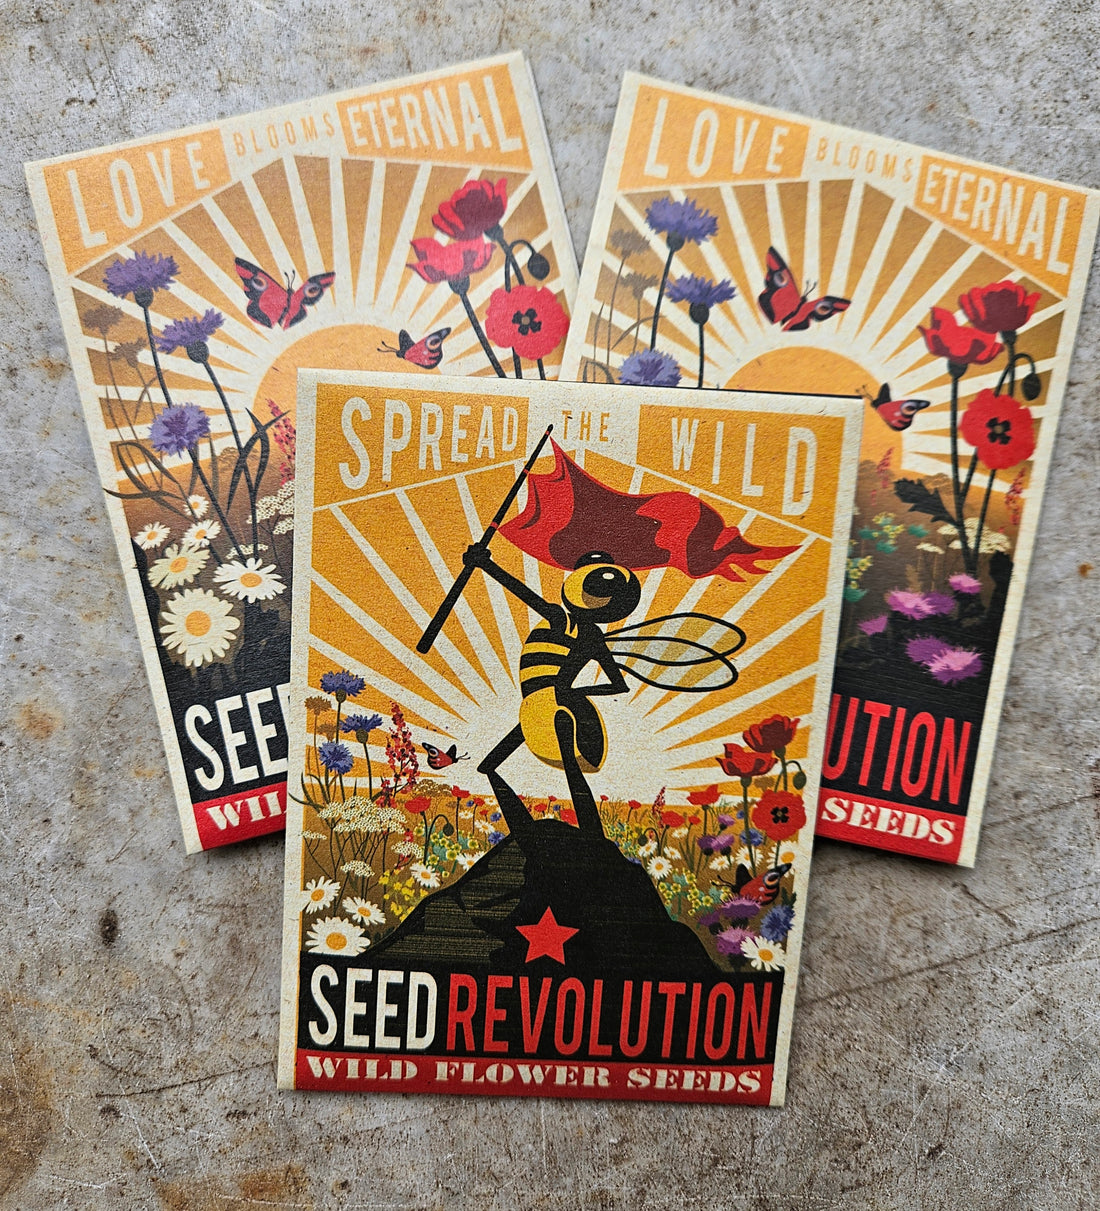 Seed Revolution seeds